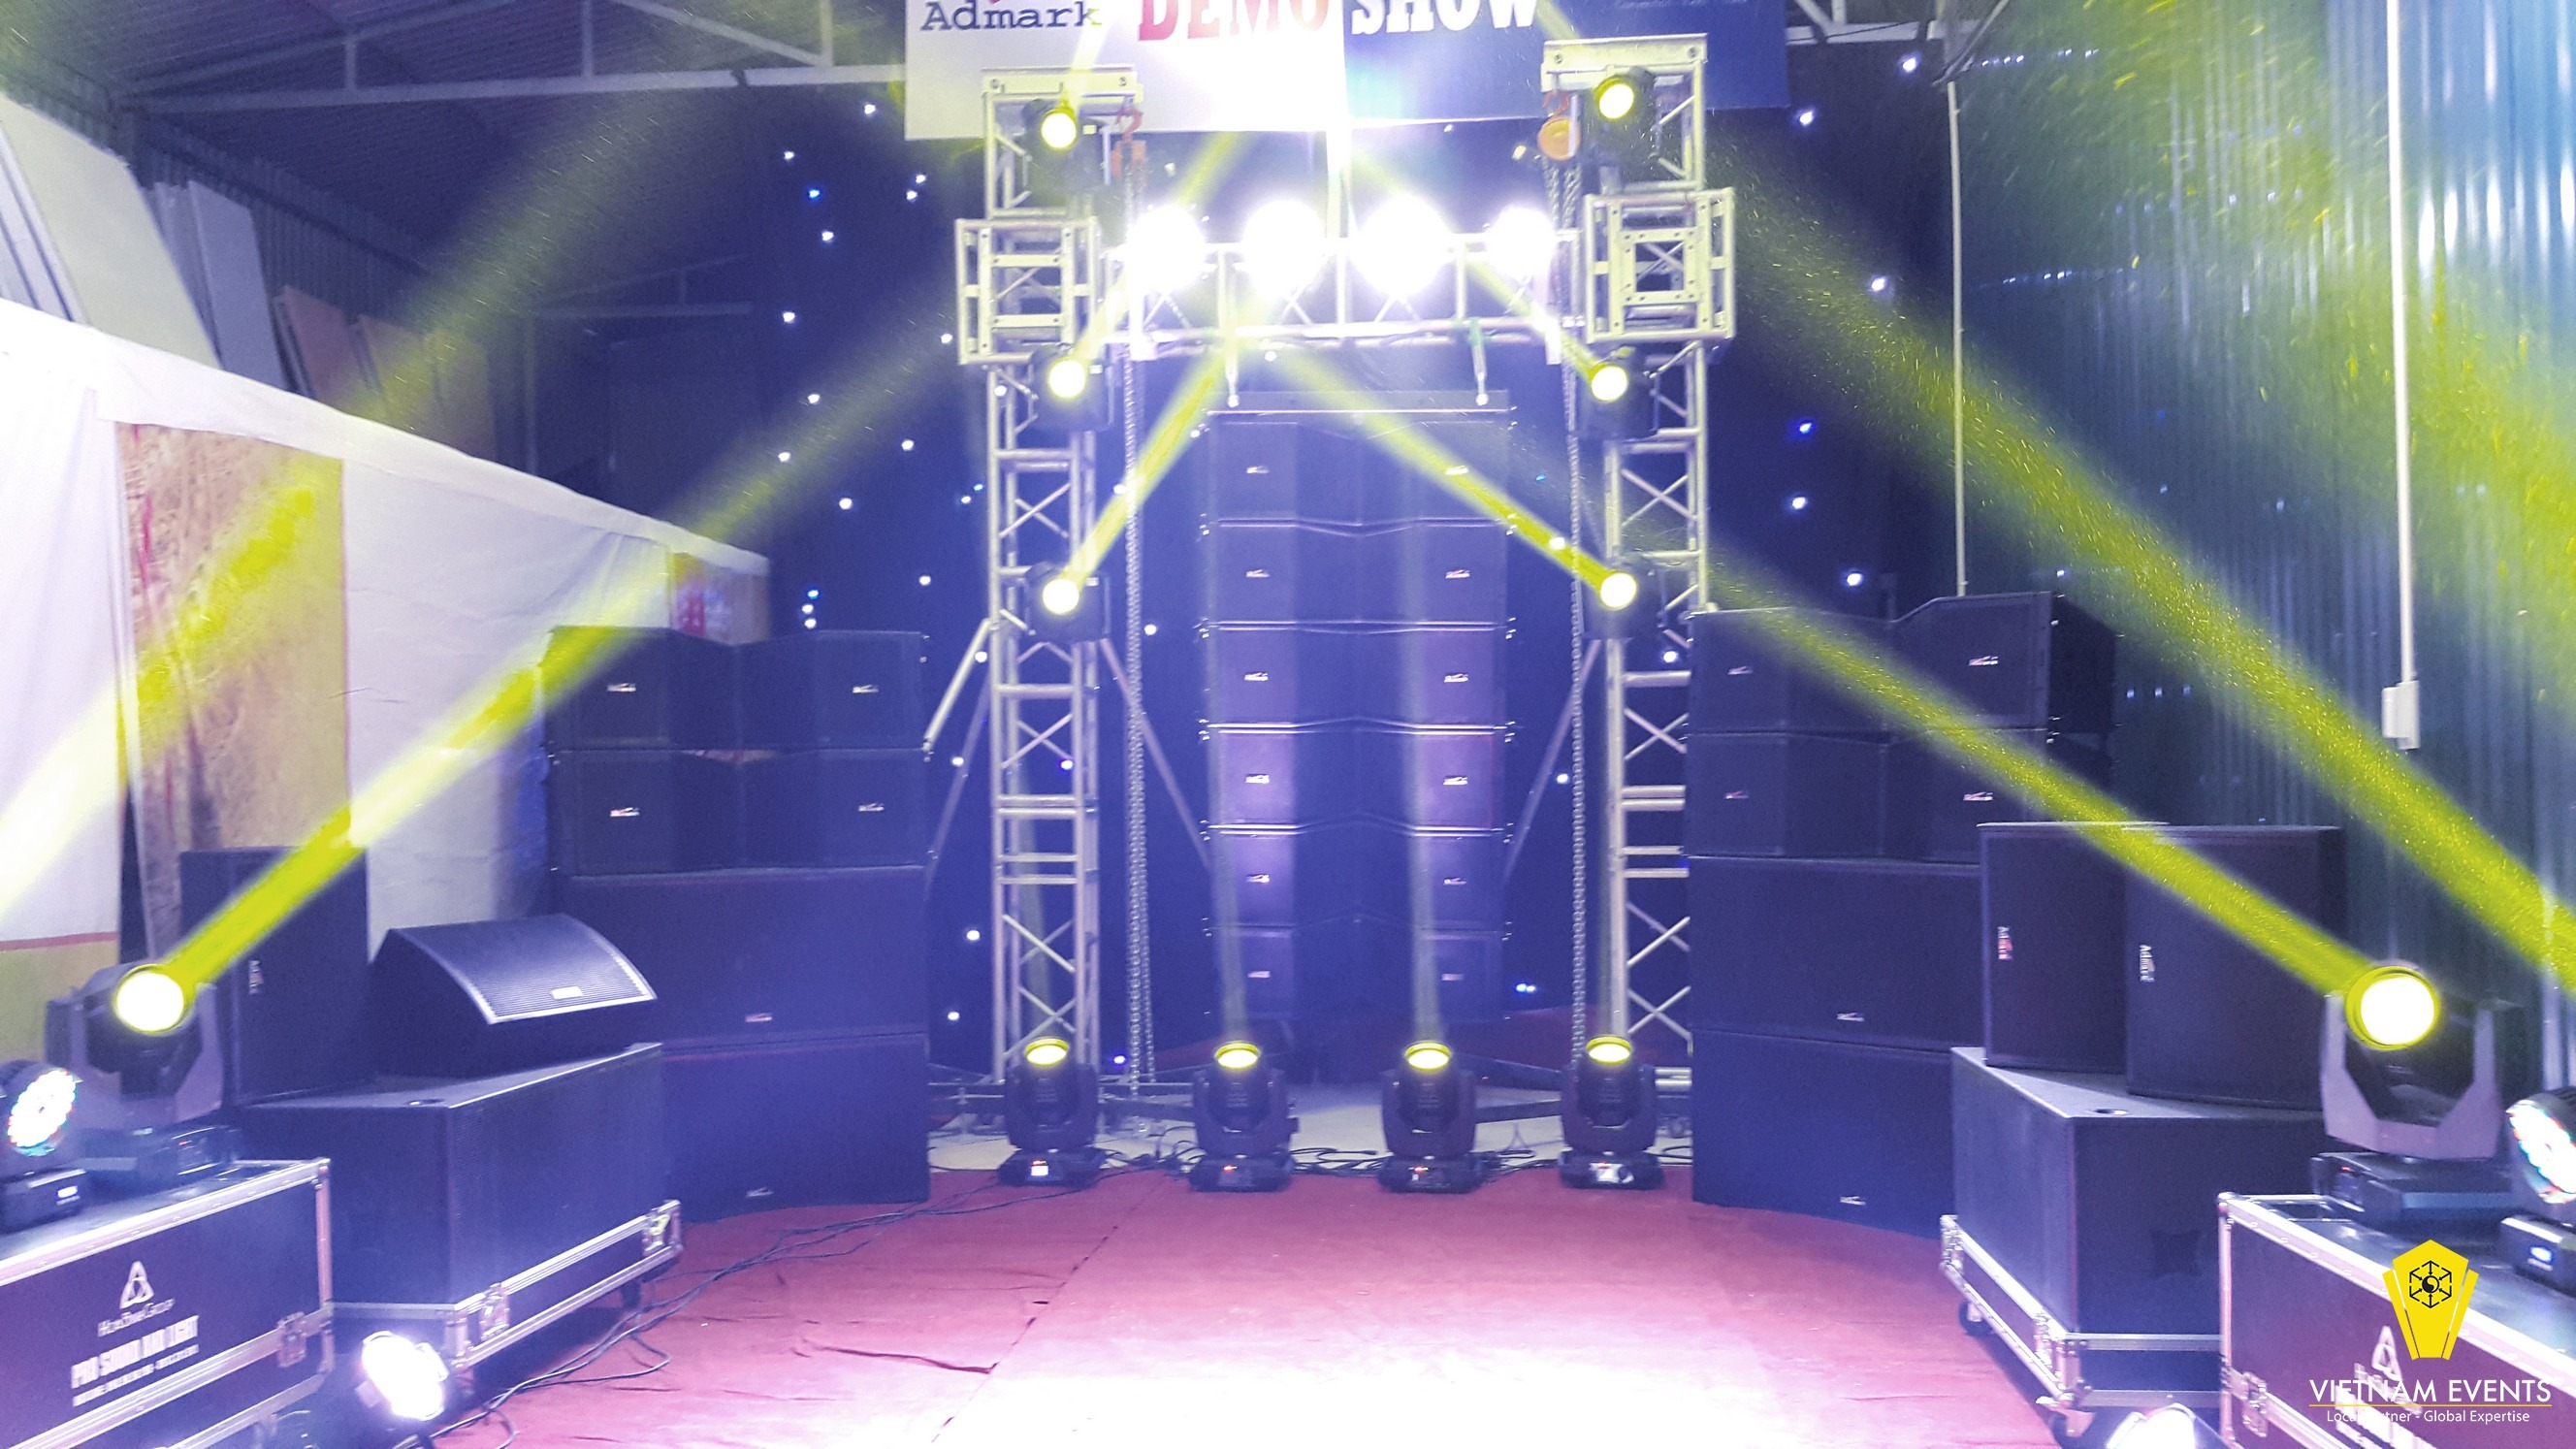 Vietnam Events provide the best event lighting rental services 